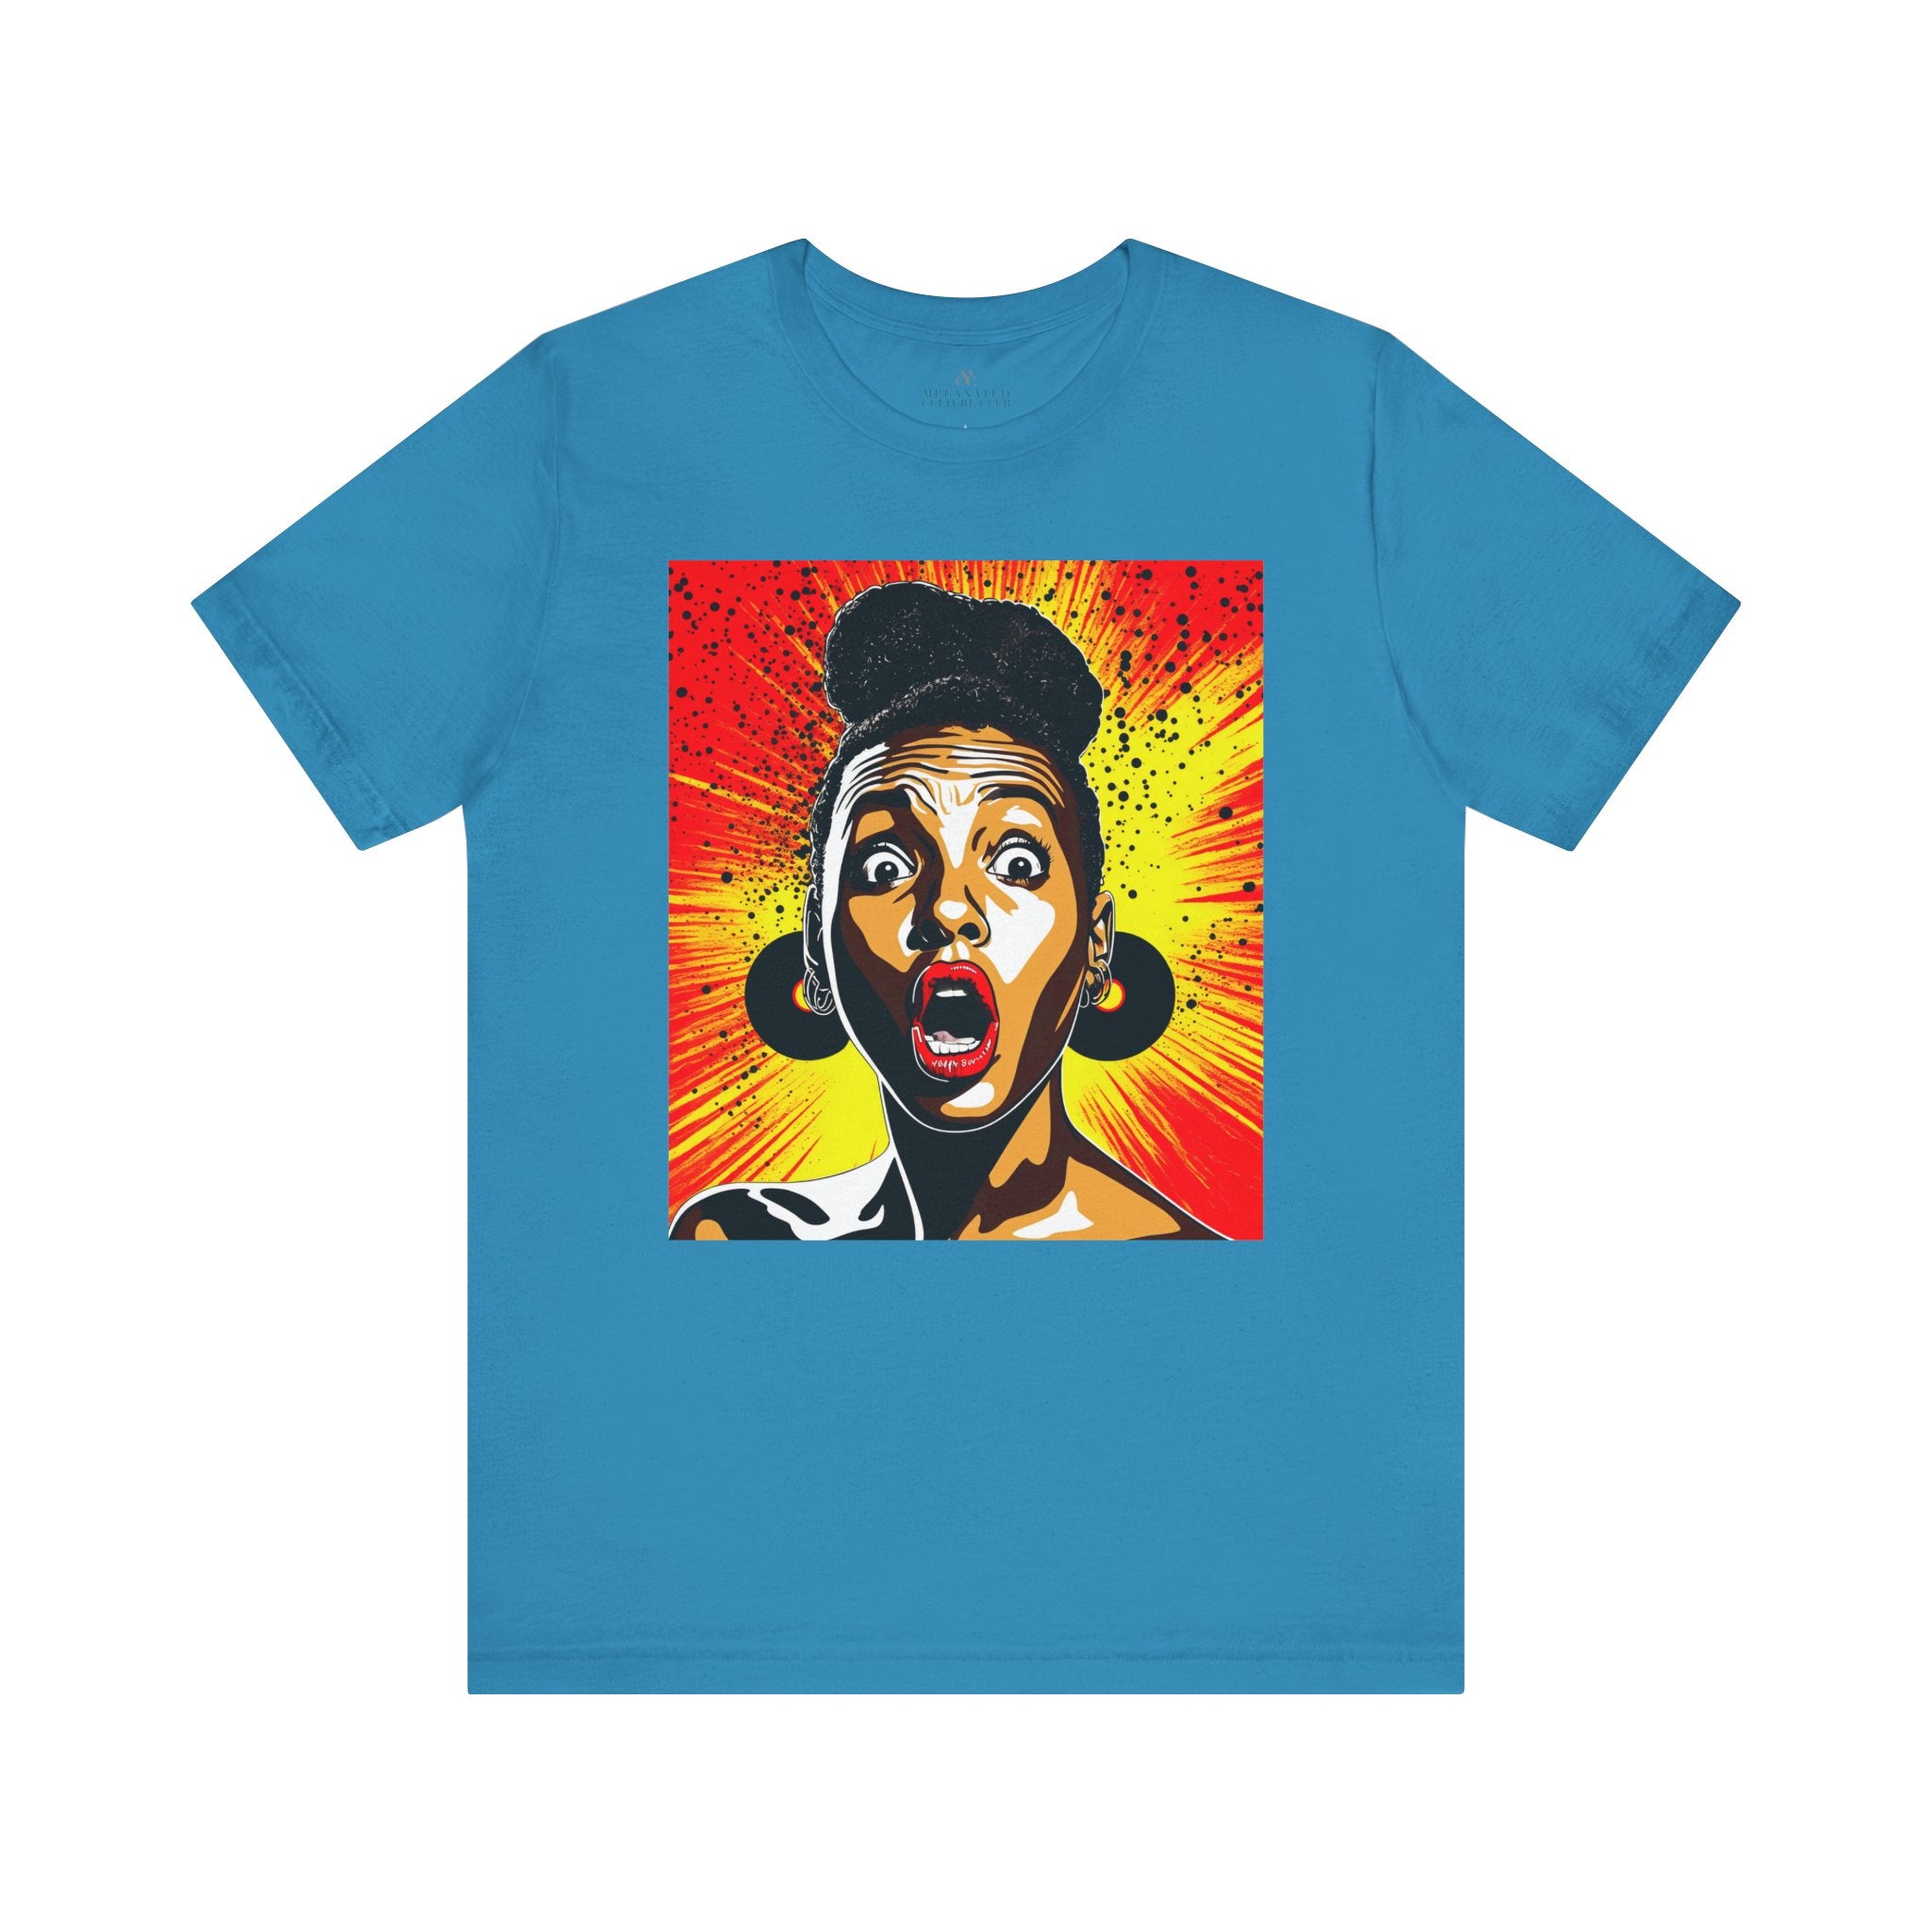 Afrocentric Pop Art Tee Shirt in aqua.